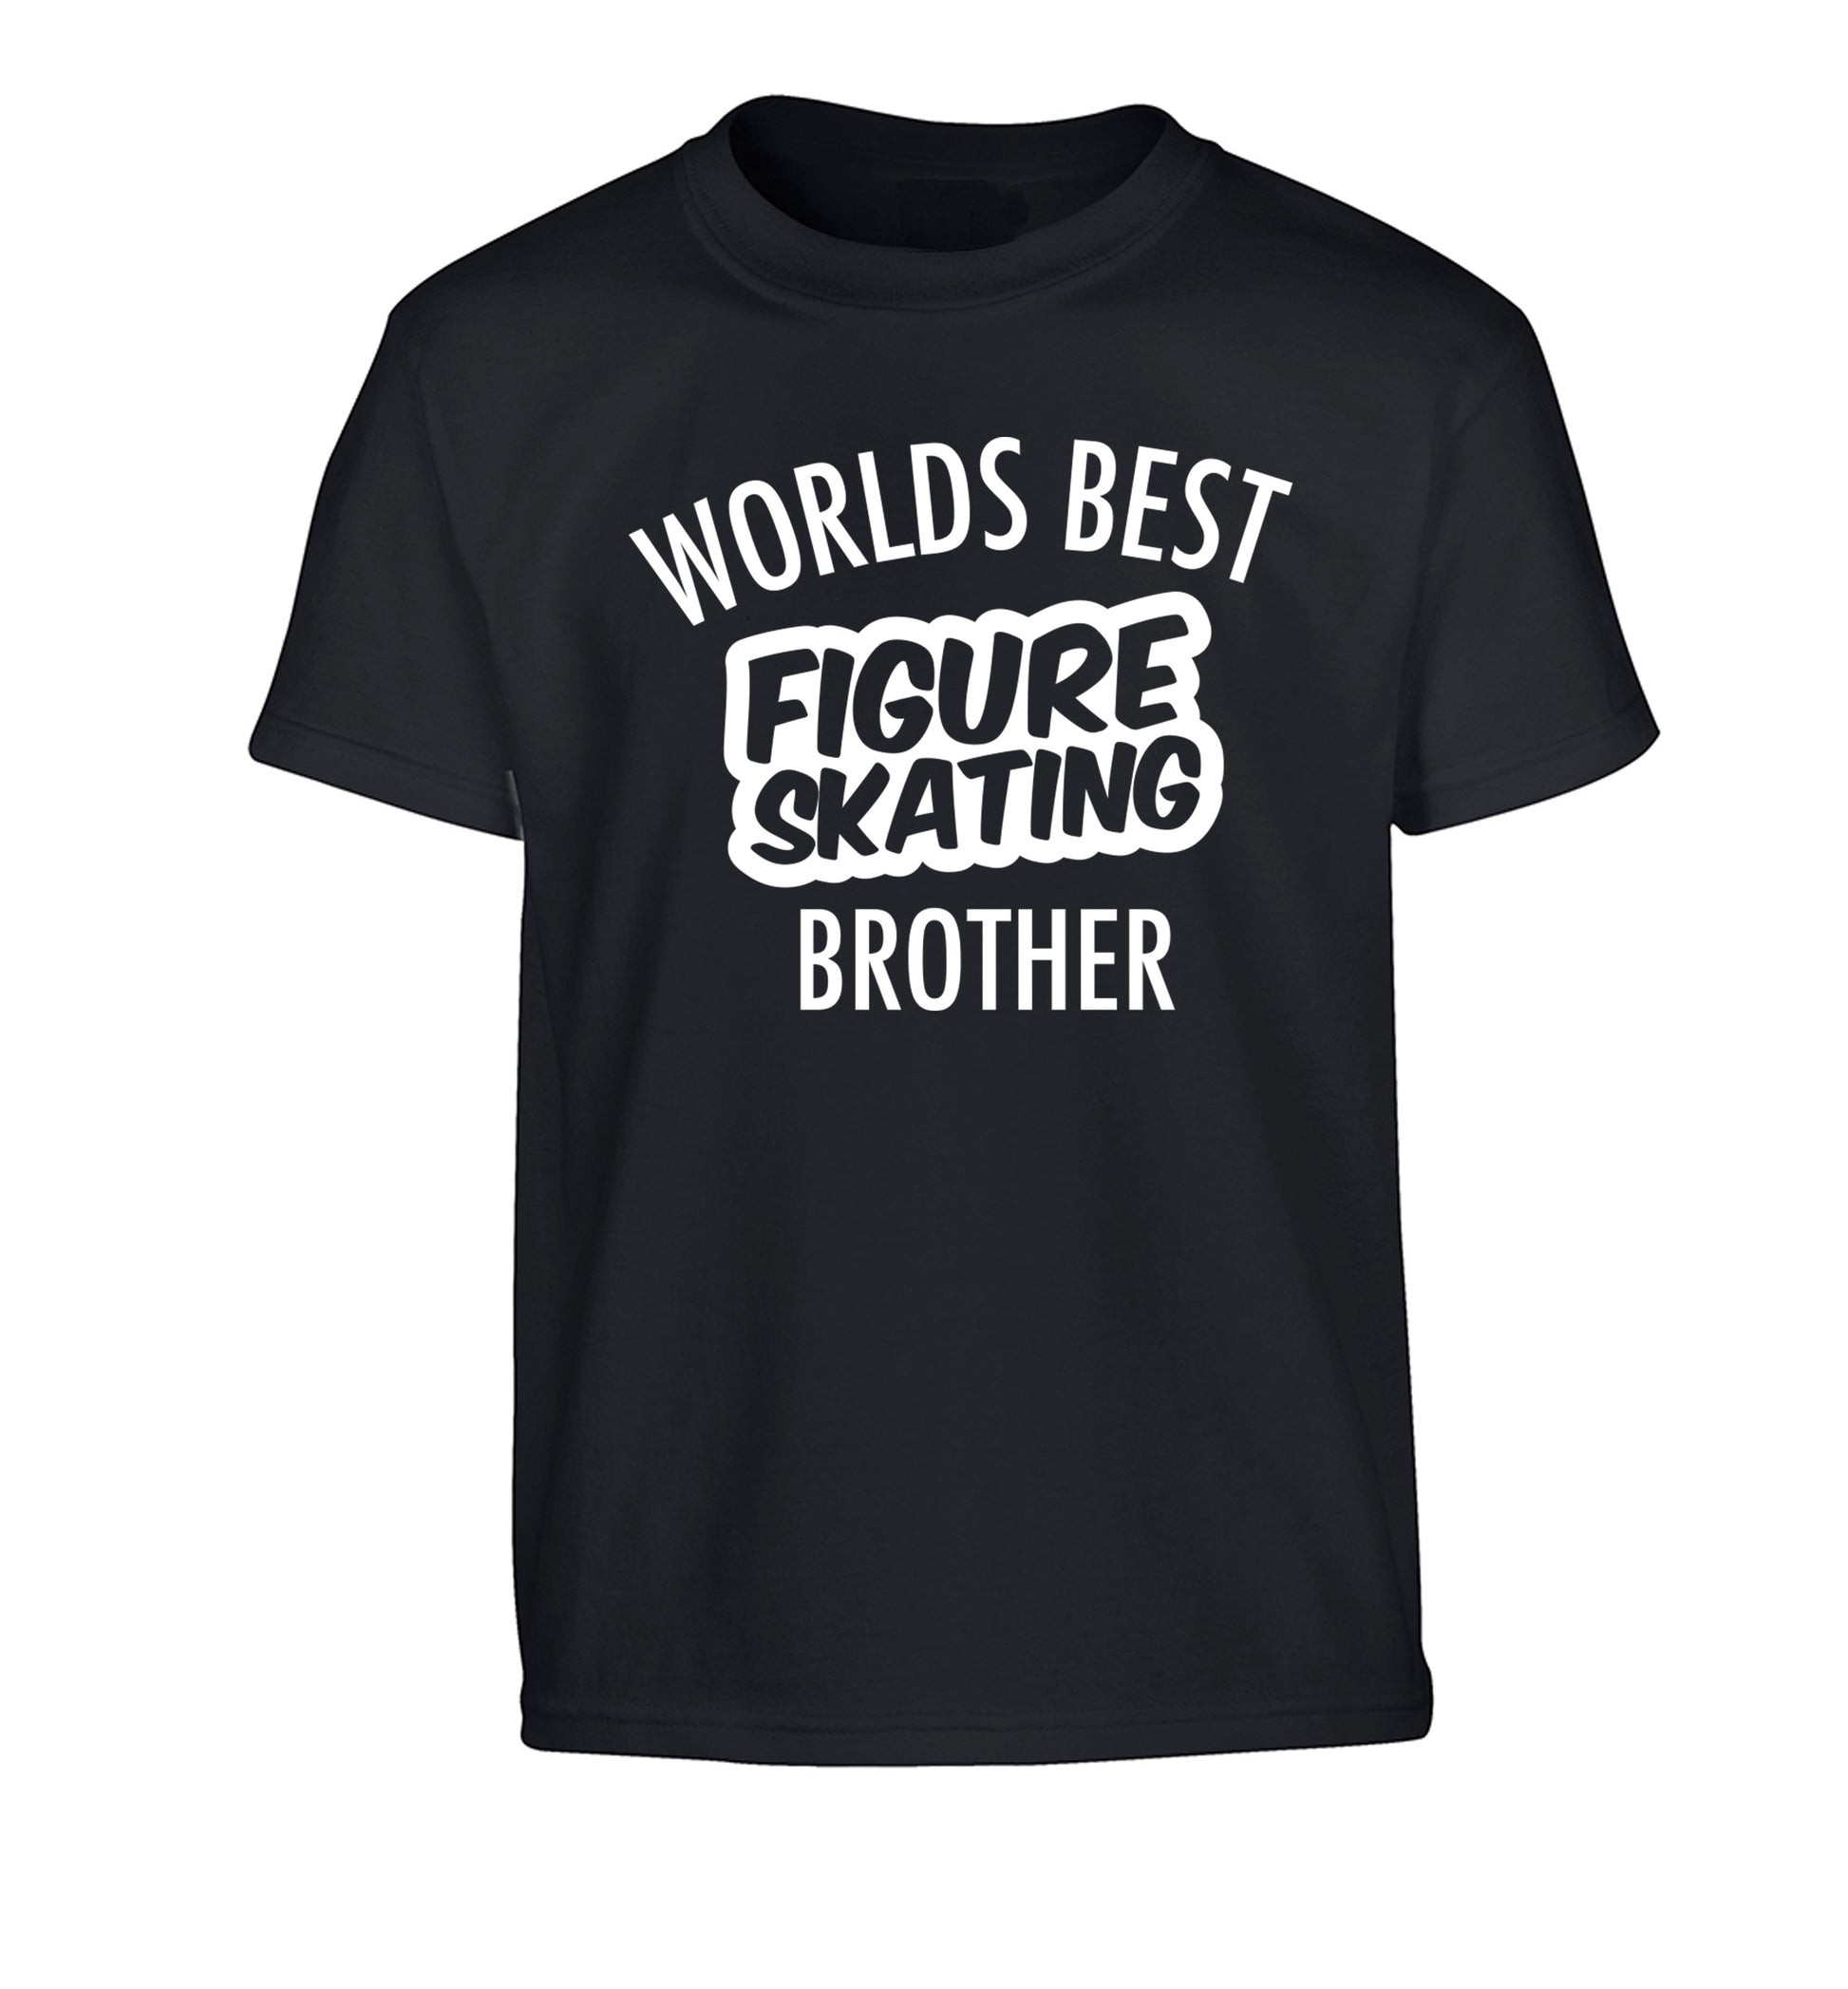 Worlds best figure skating brother Children's black Tshirt 12-14 Years